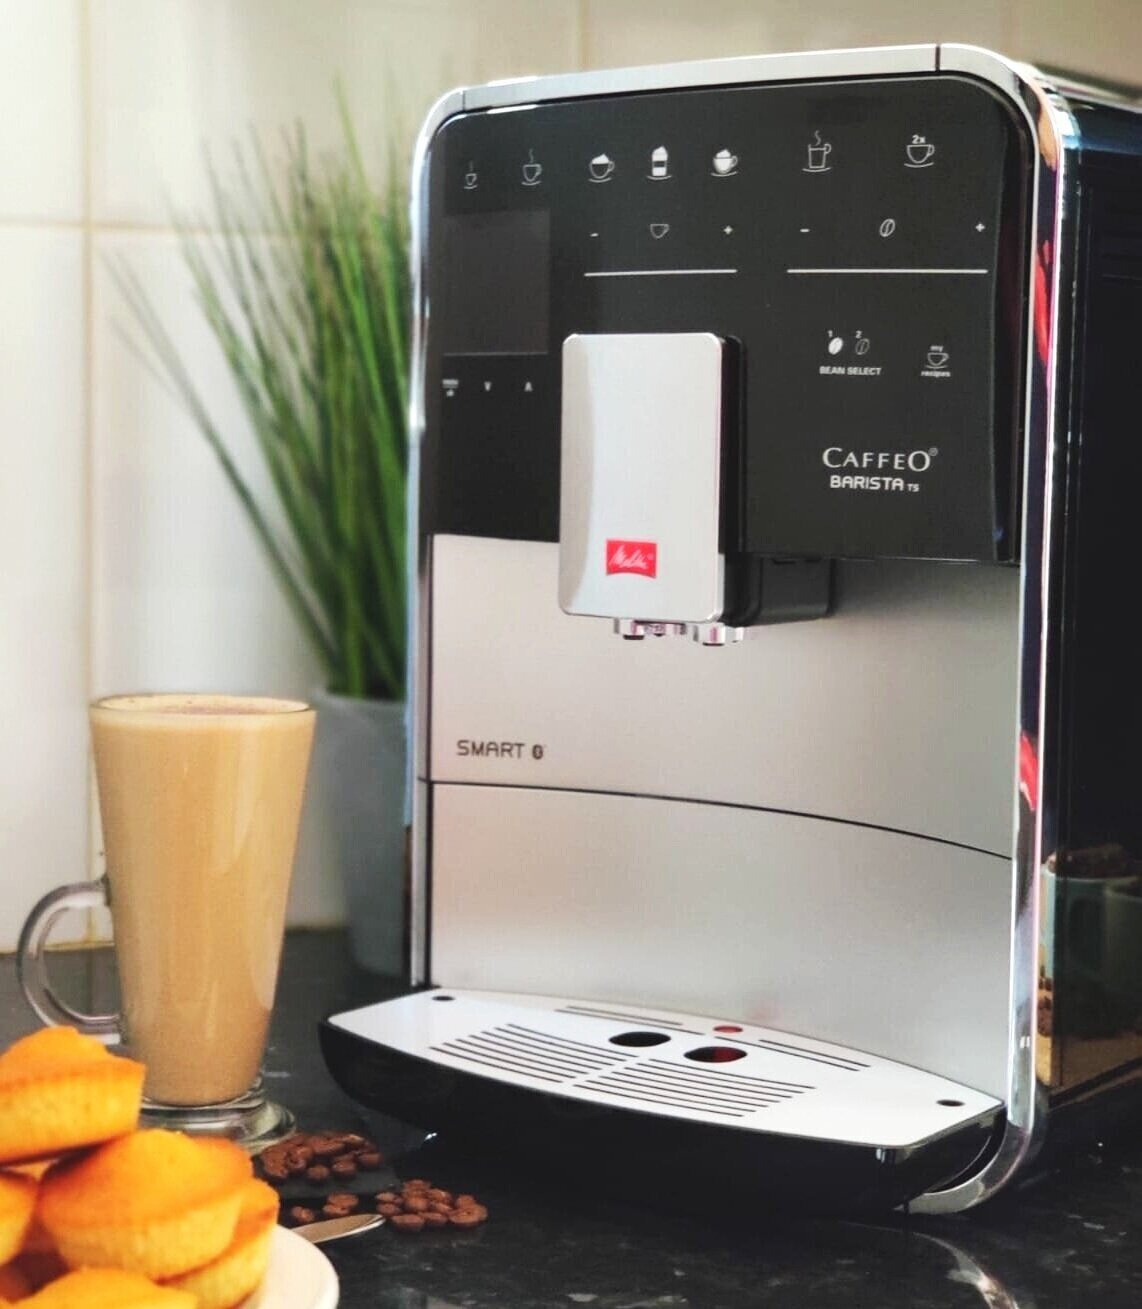 Melitta Caffeo Barista TS Smart review: The perfect coffee machine? Almost